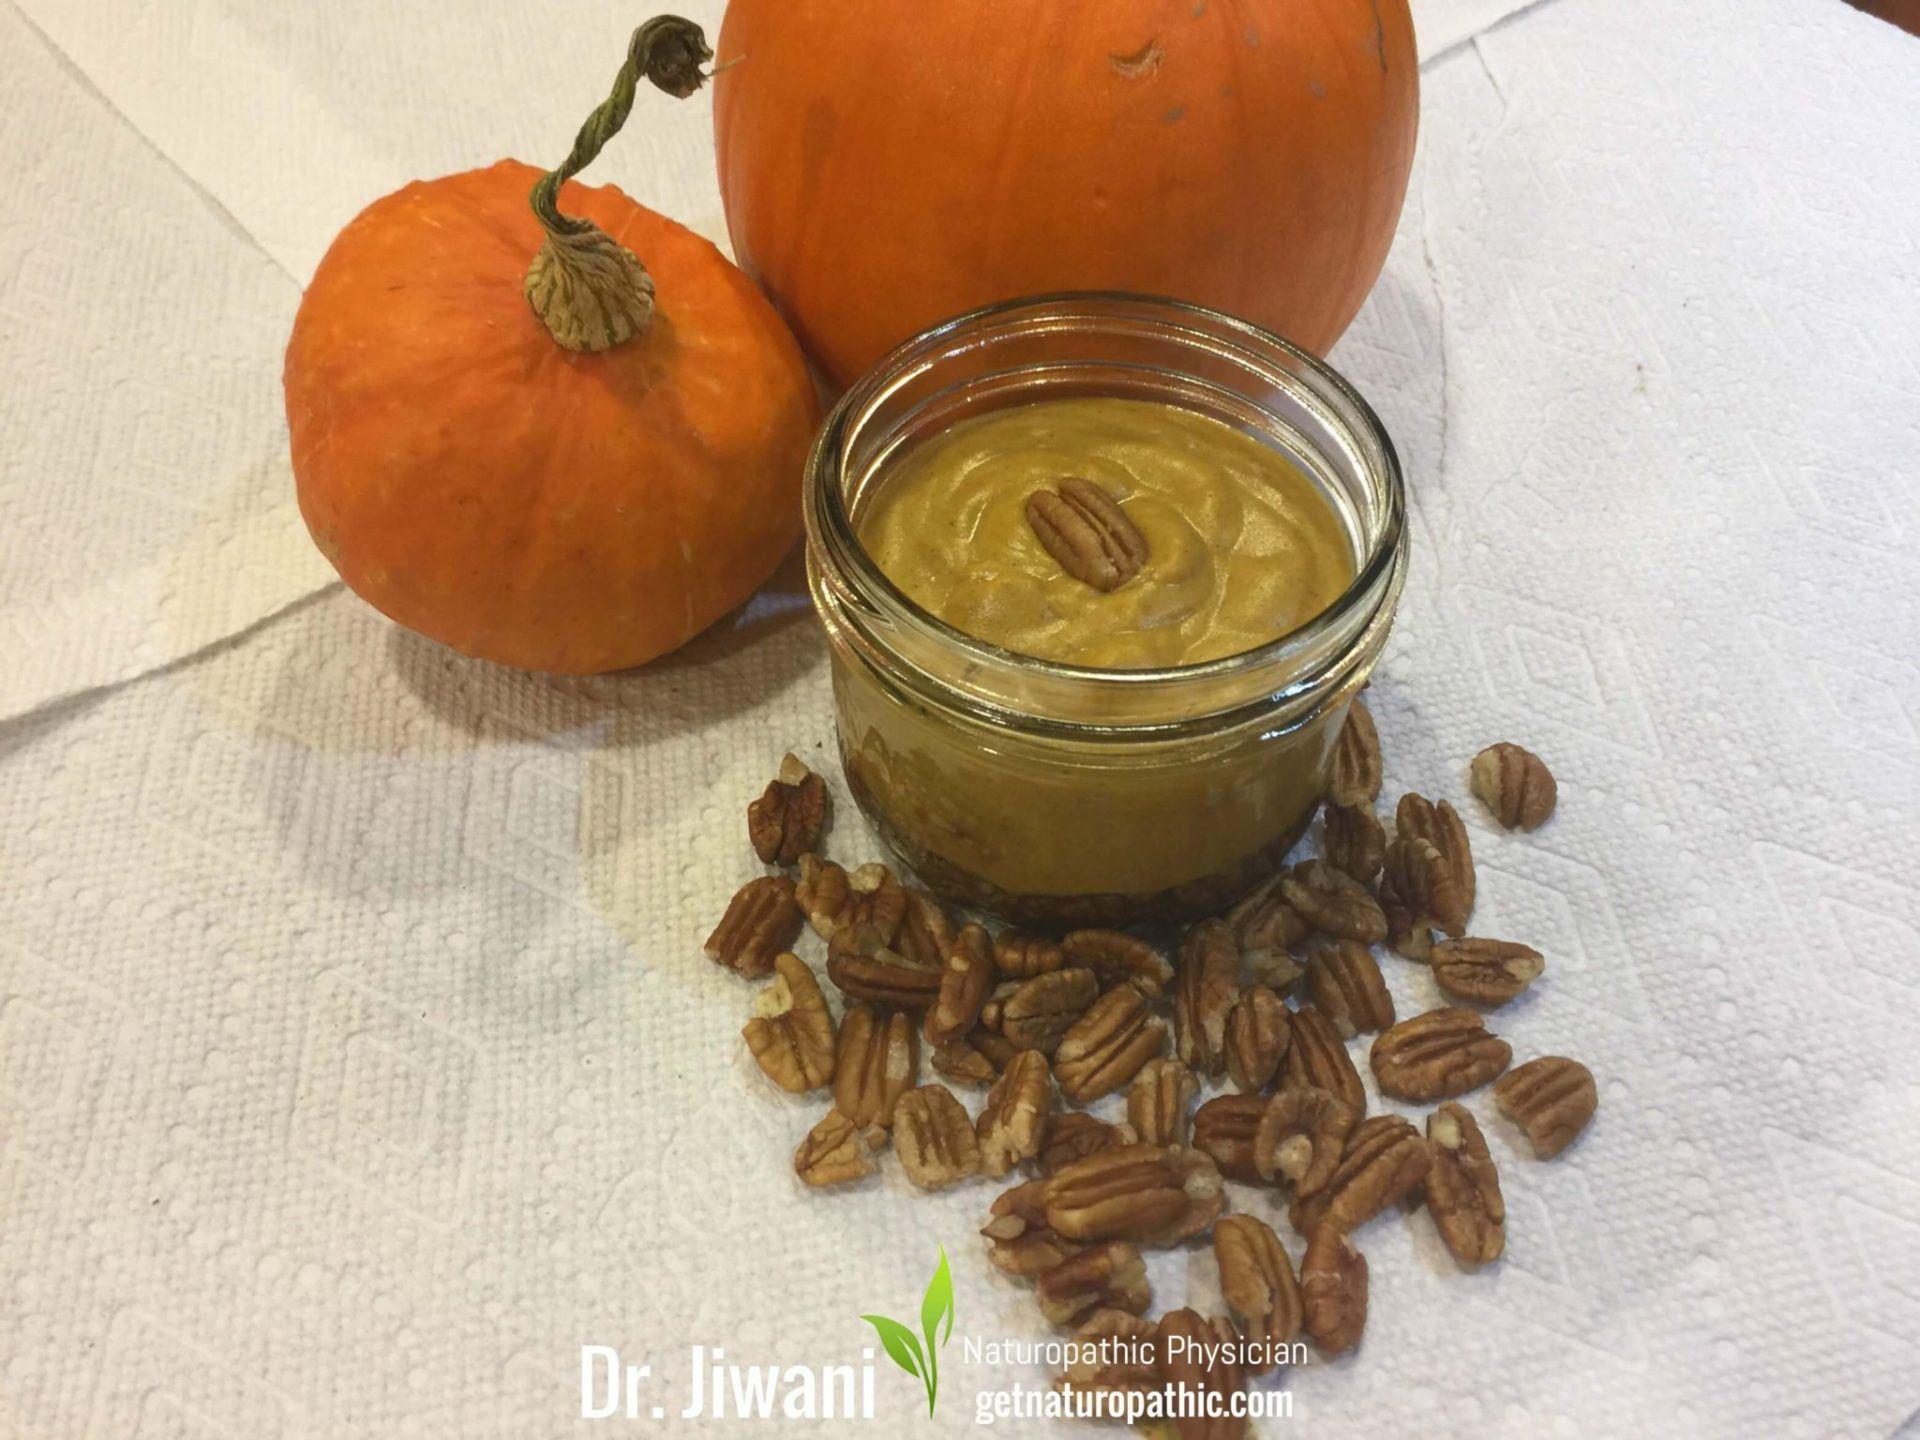 Recipe: Dr. Jiwani's Pumpkin Pie Filling (Low Carb, Allergy Free, Vegan)